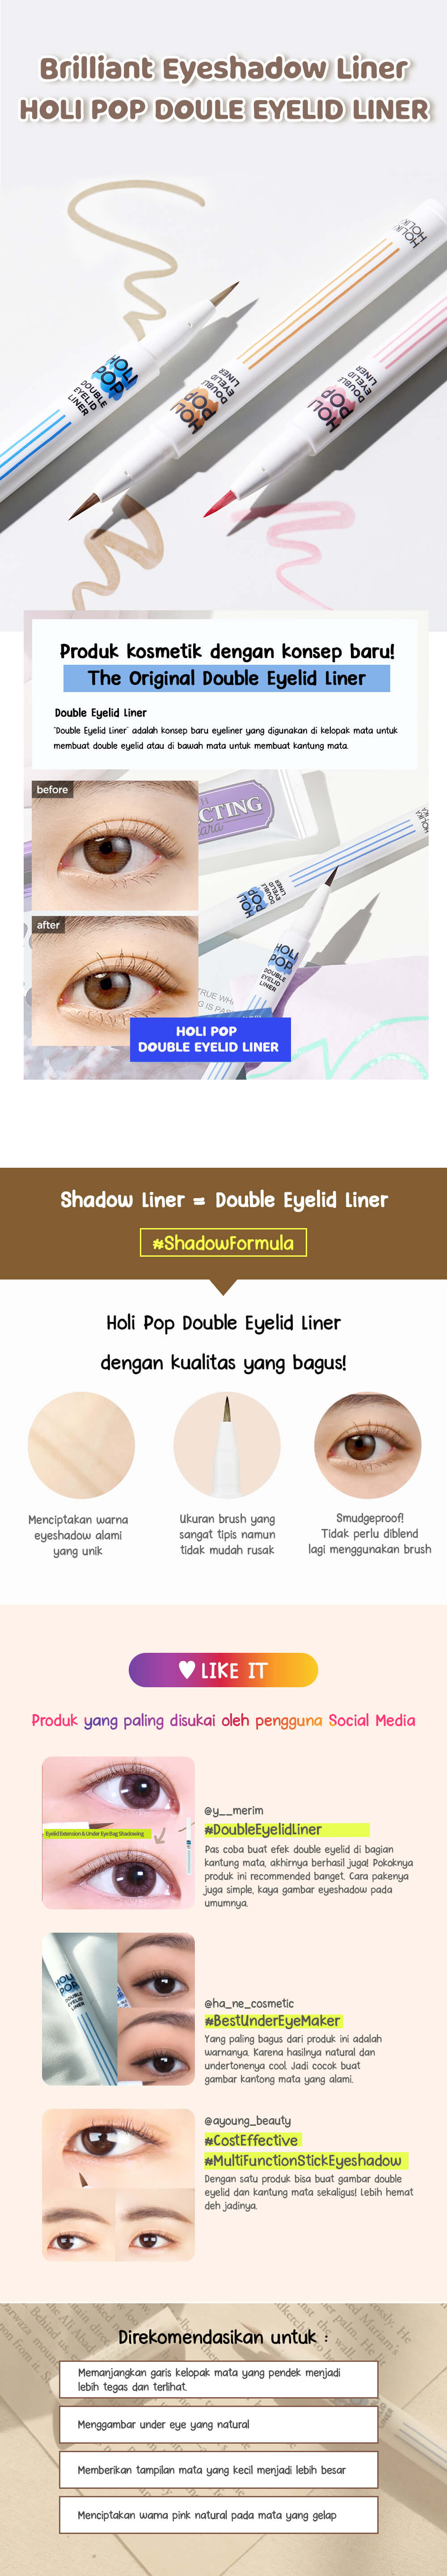 Holi Pop Double Eyelid Liner | Aegyosal Liner